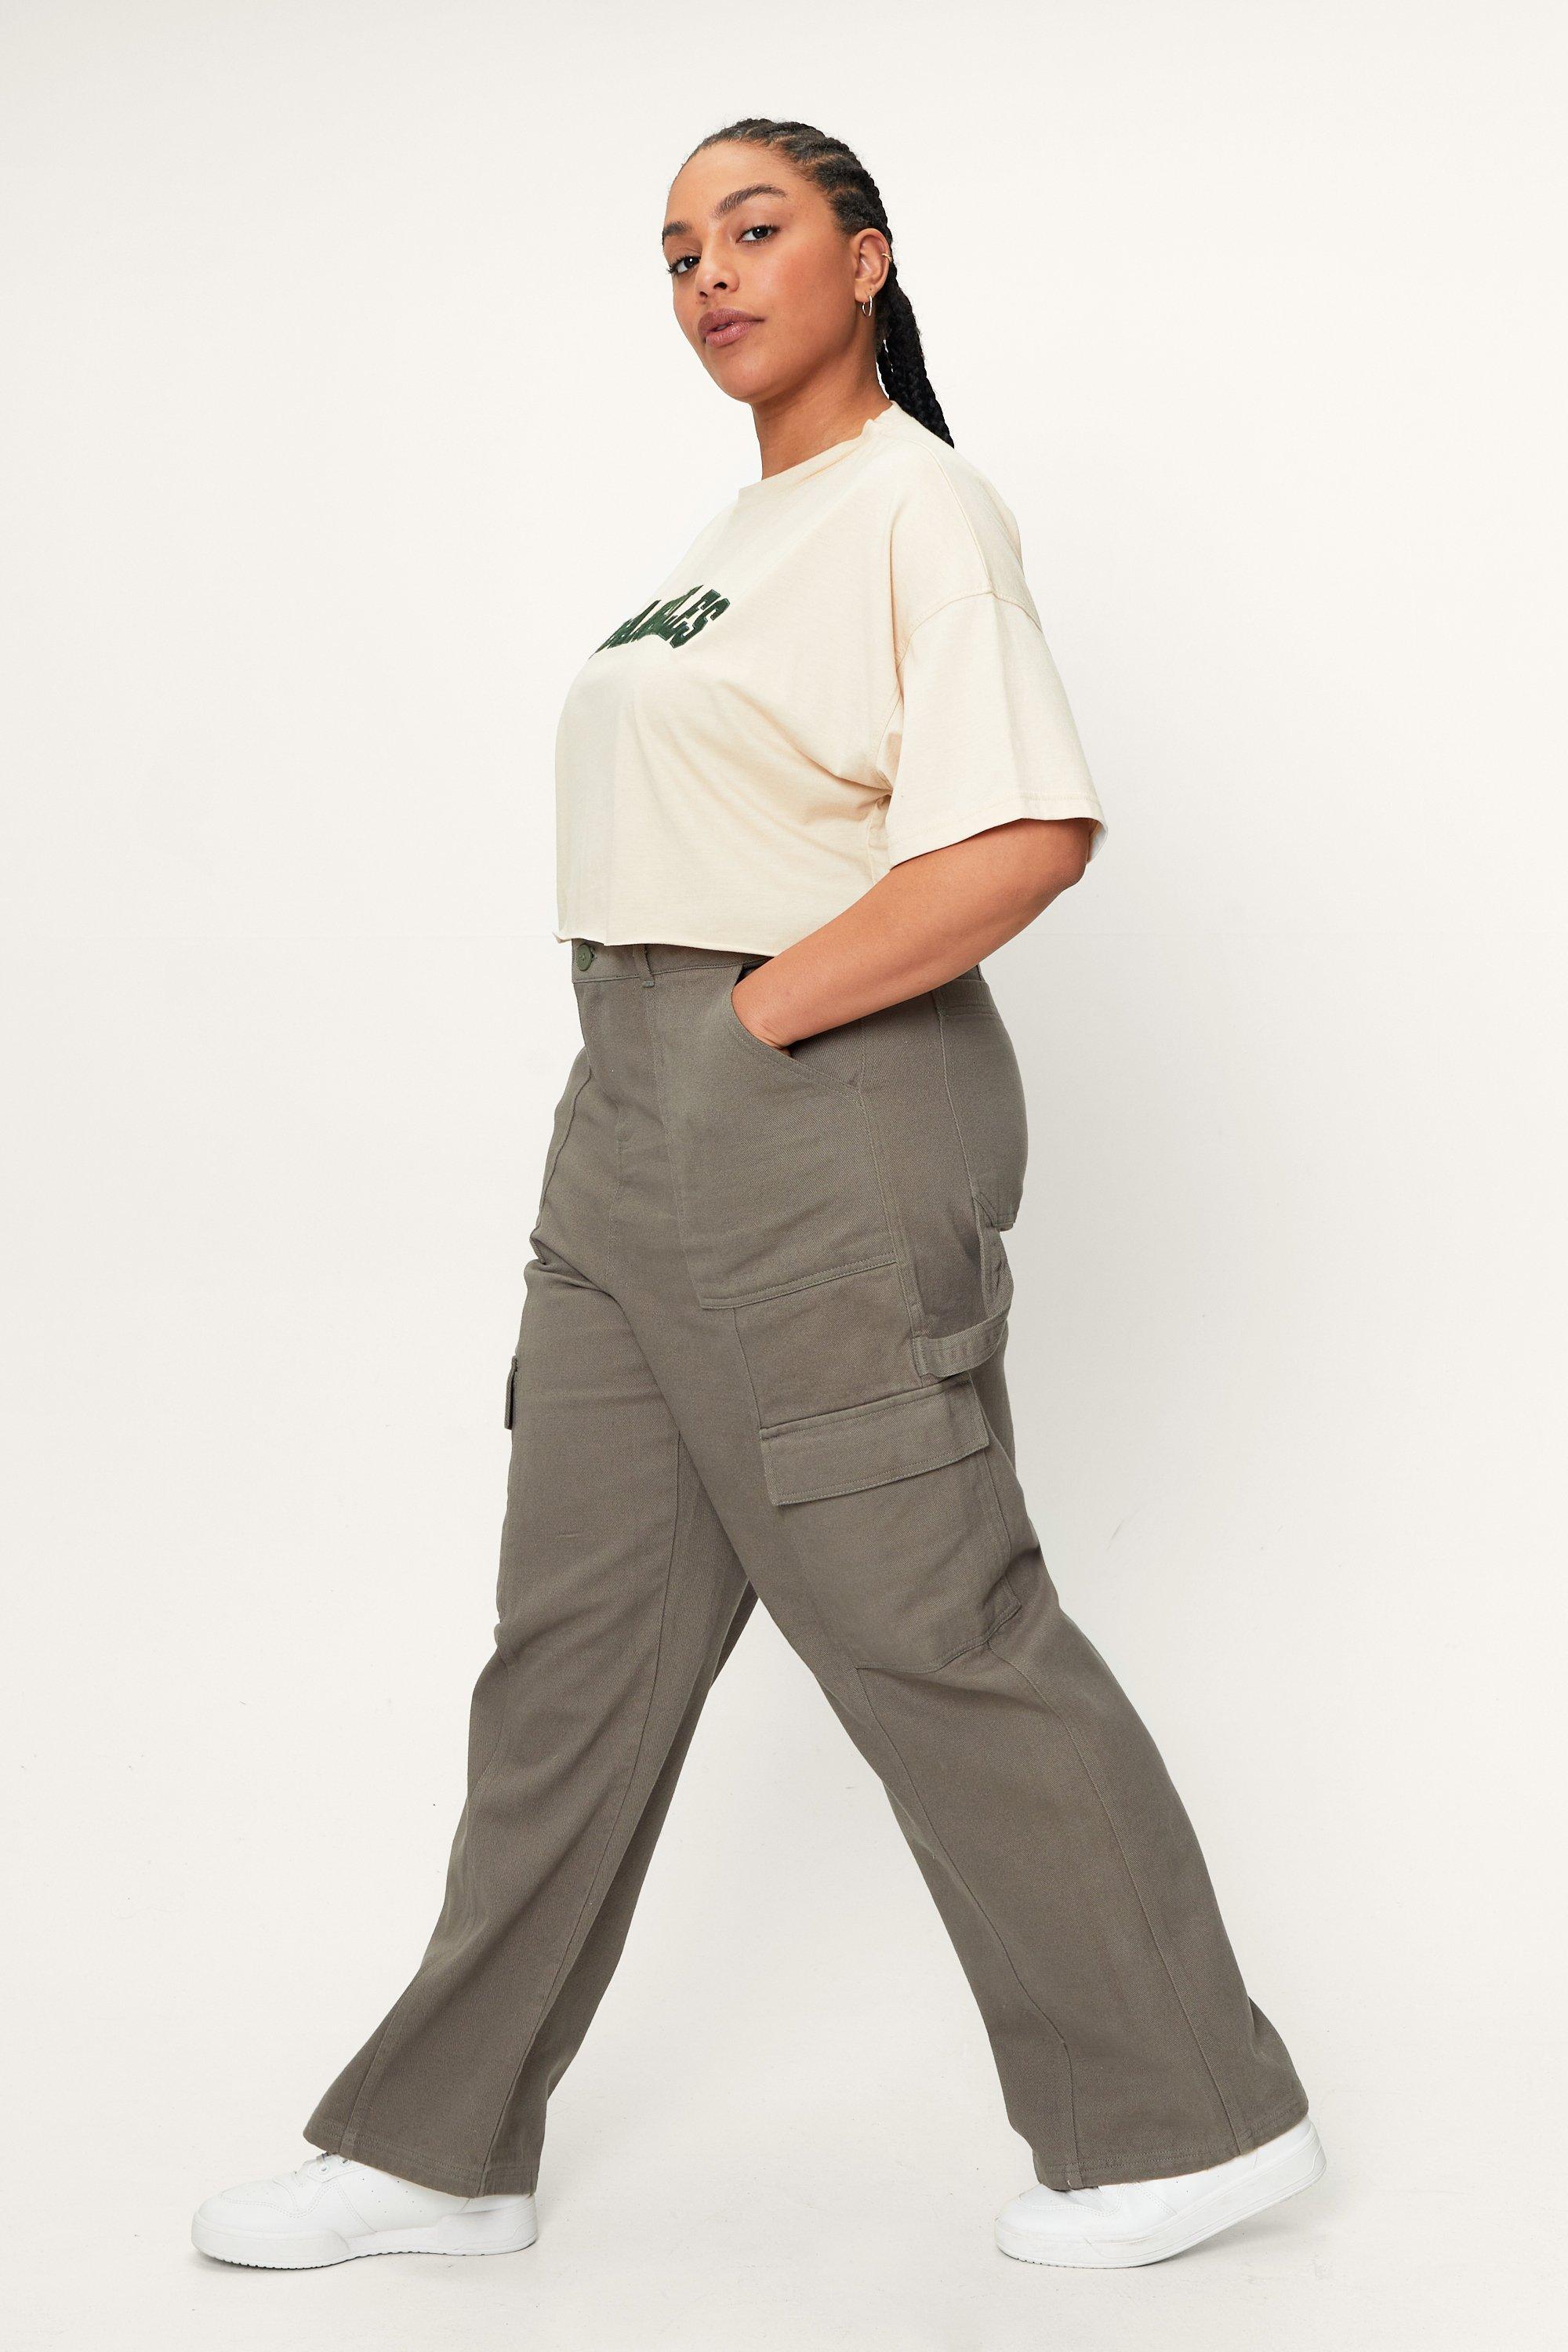 Khaki trouser women - Plus size - Straight leg 2 back pockets